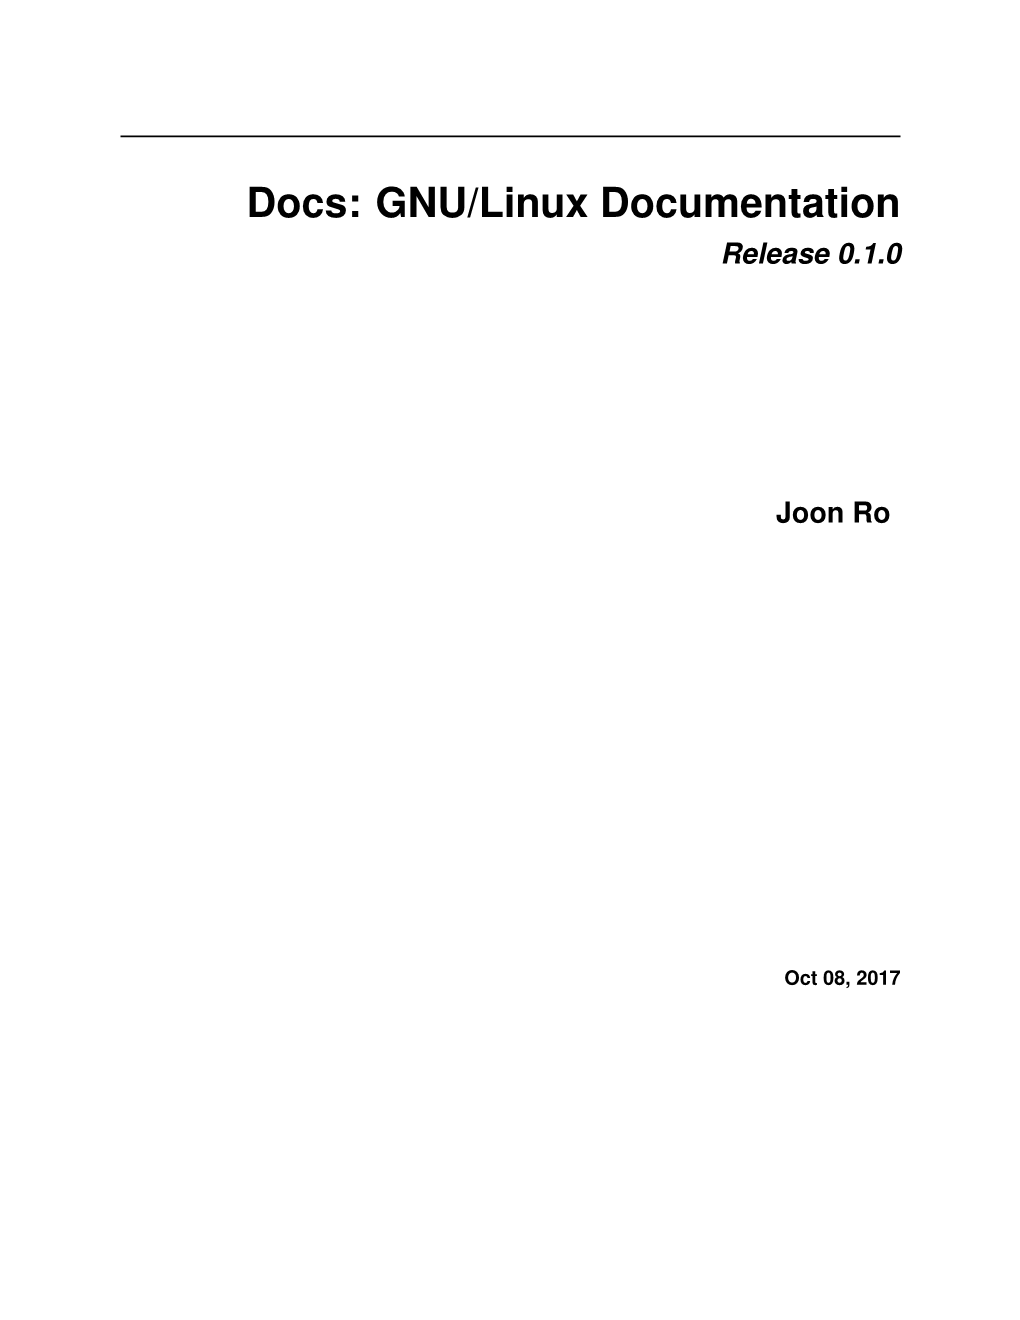 GNU/Linux Documentation Release 0.1.0